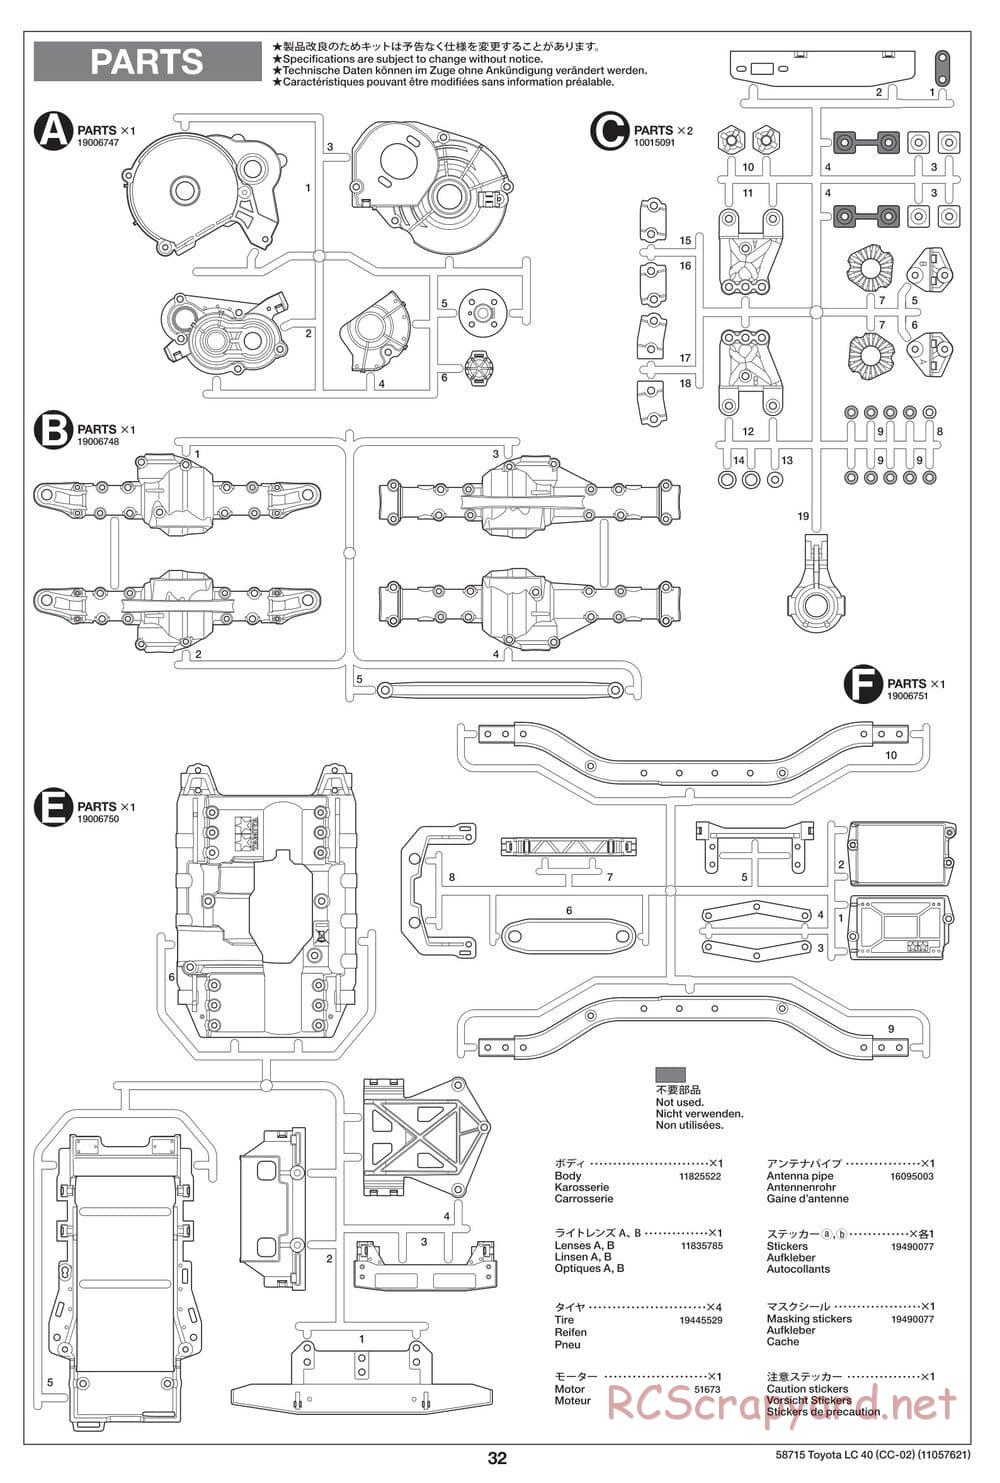 Tamiya - Toyota Land Cruiser 40 - CC-02 Chassis - Manual - Page 32